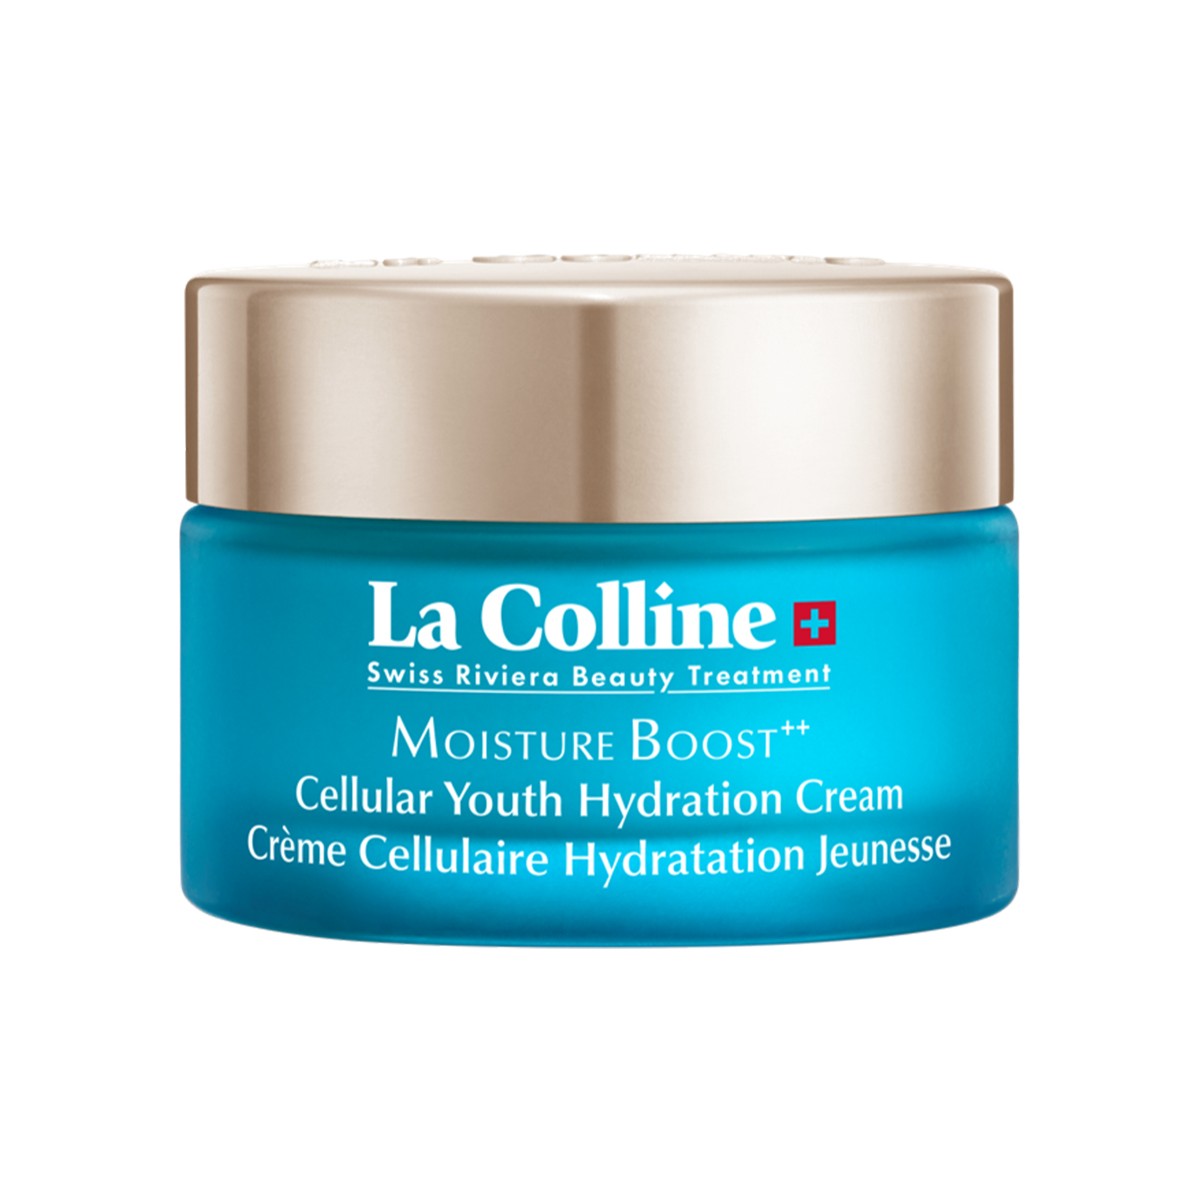 LA COLLINE Cellular Youth Hydration Cream 50 ML Gençleştirici ve Nemlendirici Krem